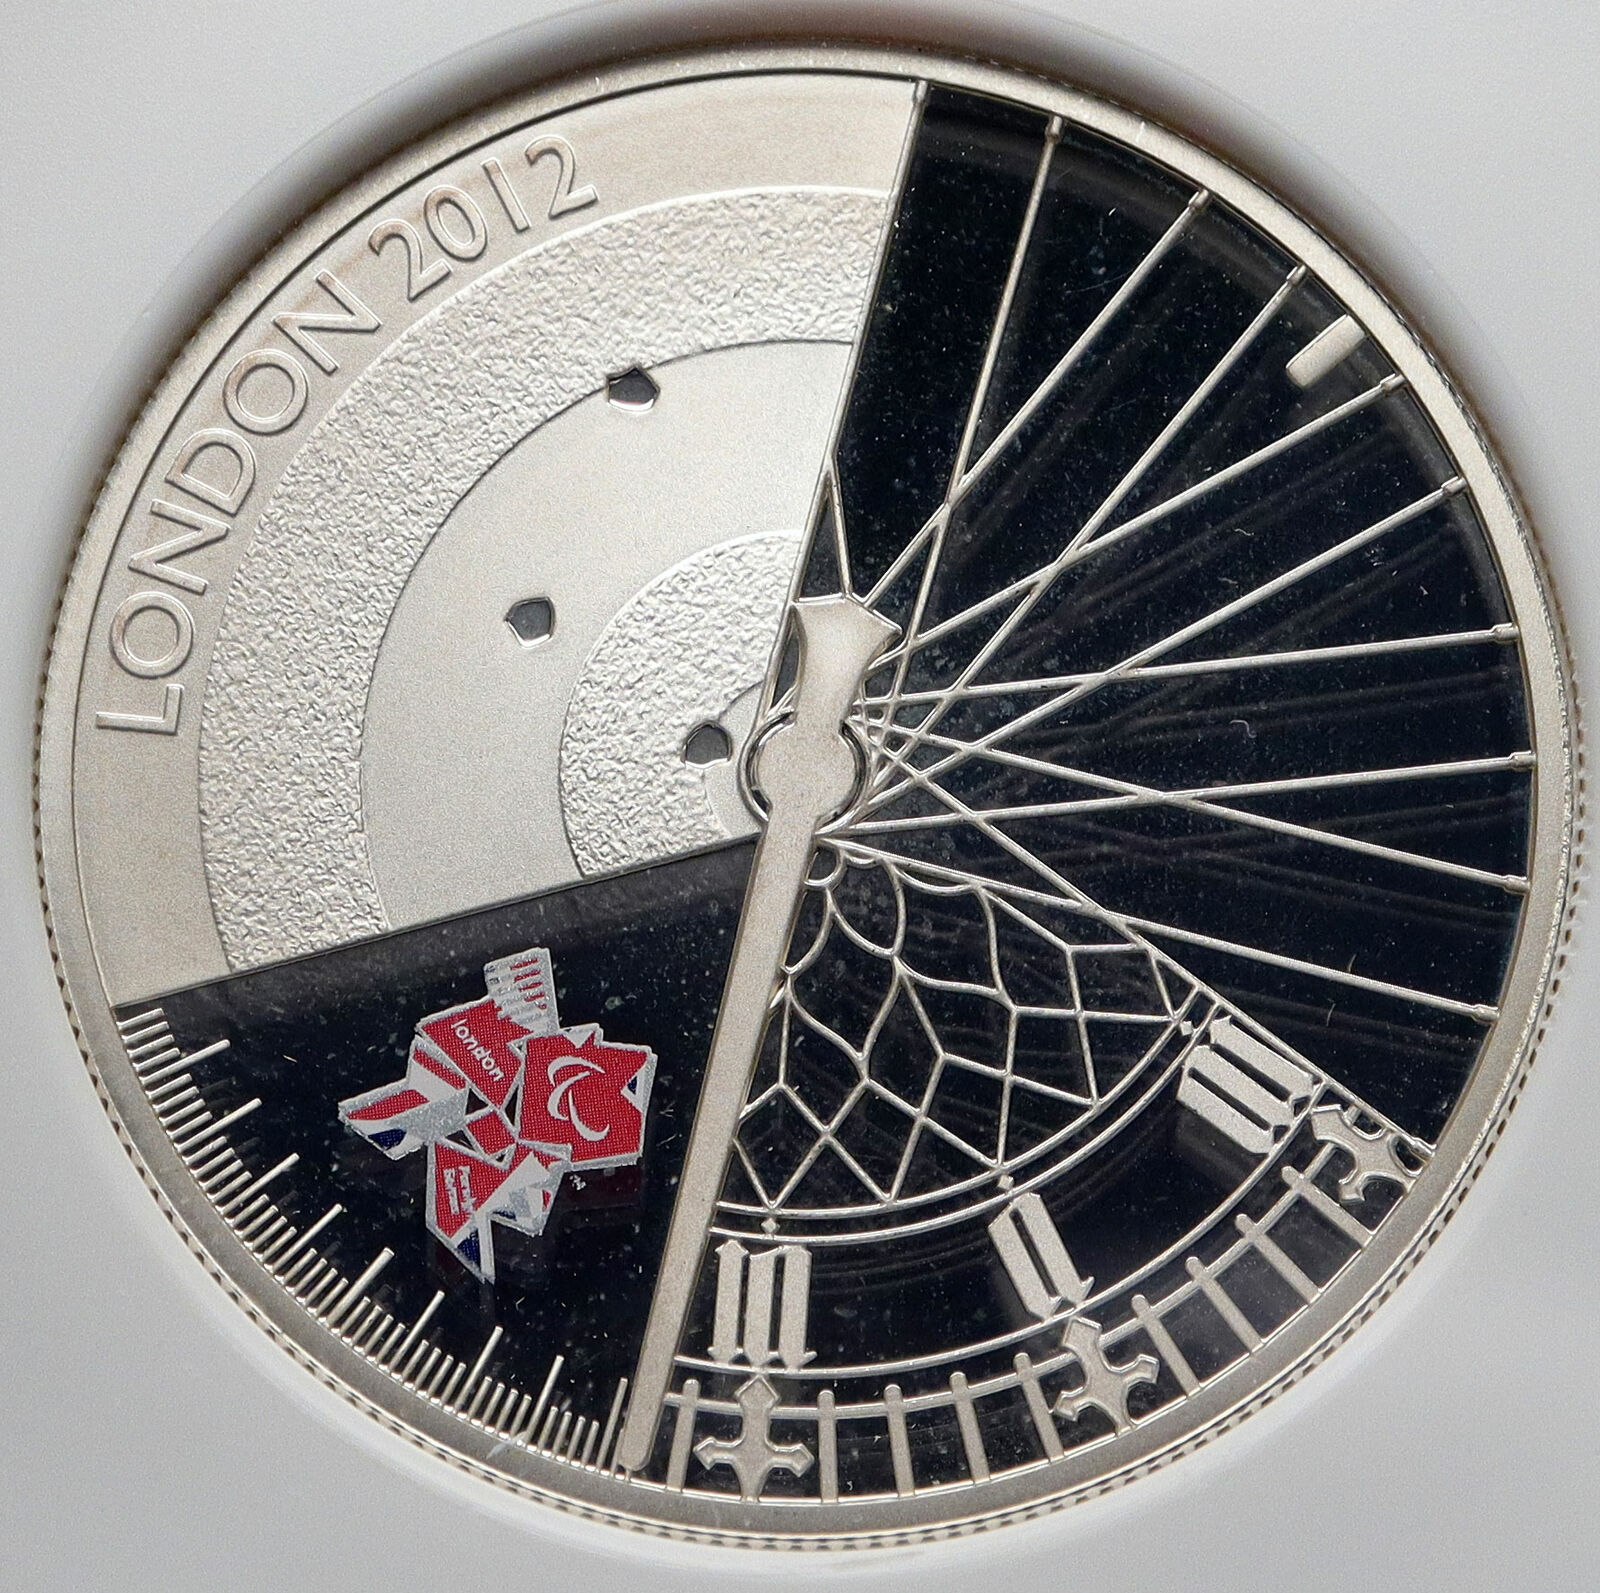 2012 United Kingdom British Paralympics LONDON Proof Silver 5P Coin NGC i85286